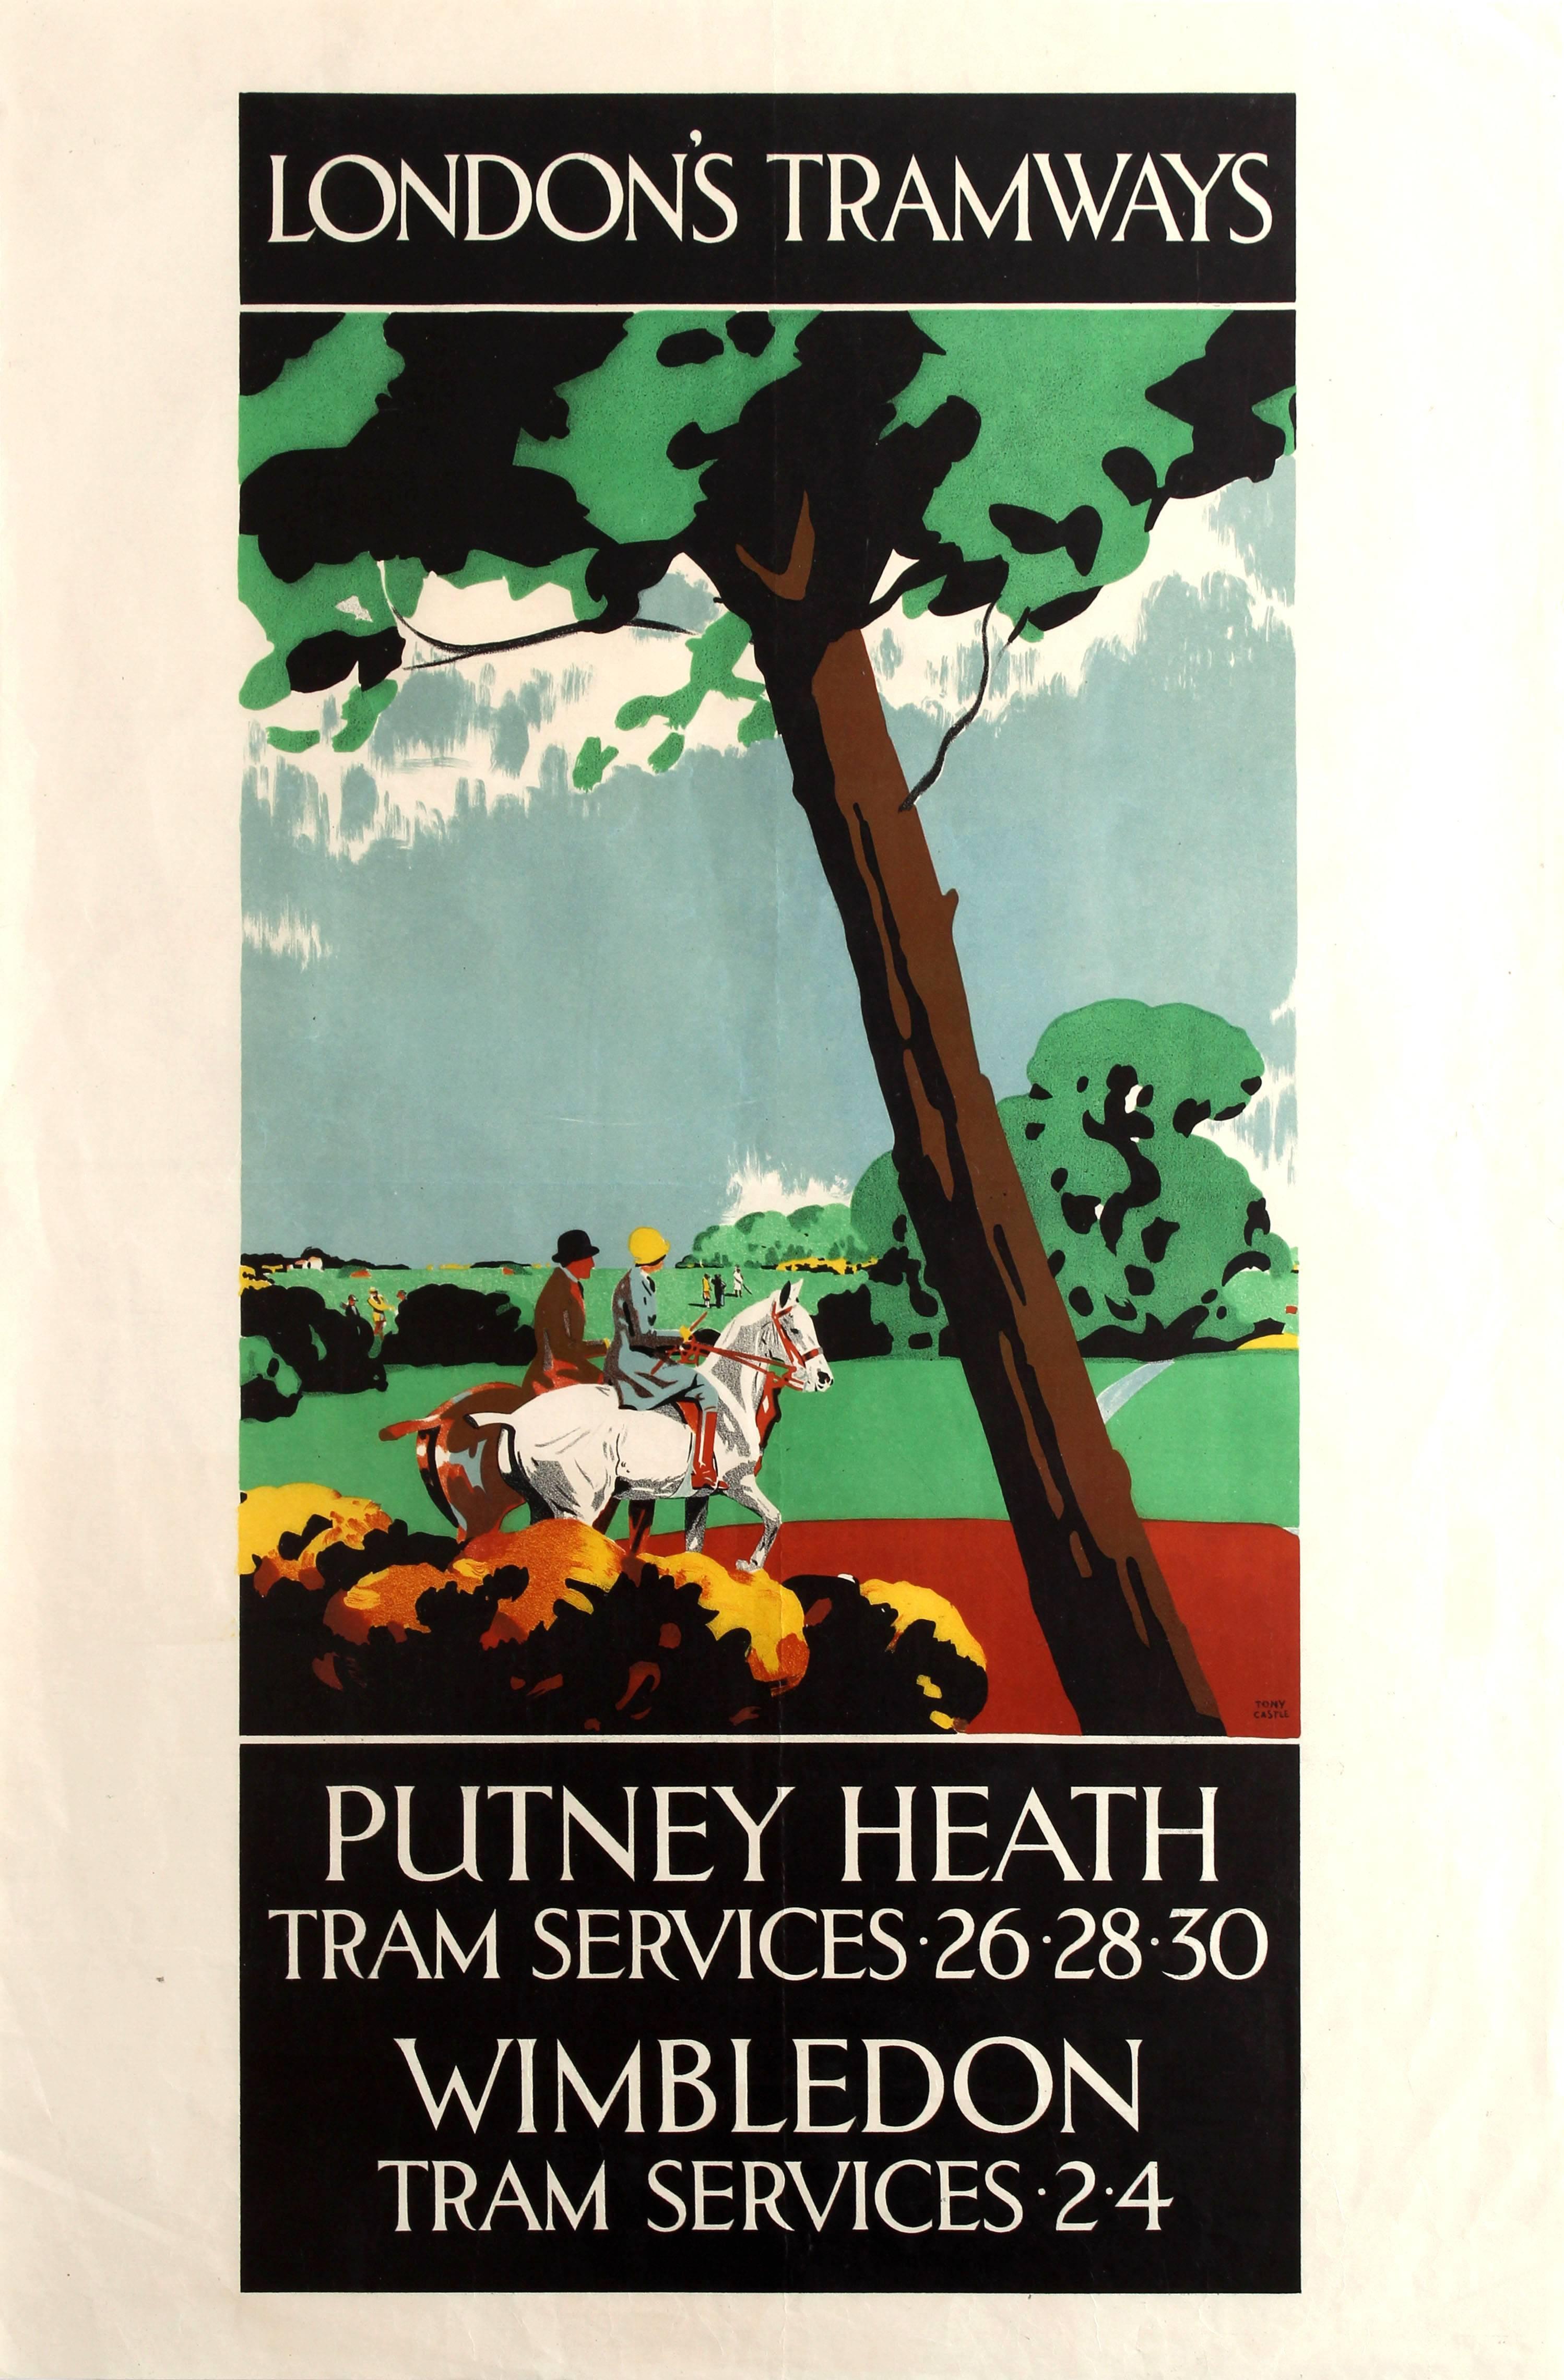 Tony Castle Print - Original Vintage Art Deco London Tramways Poster For Putney Heath And Wimbledon